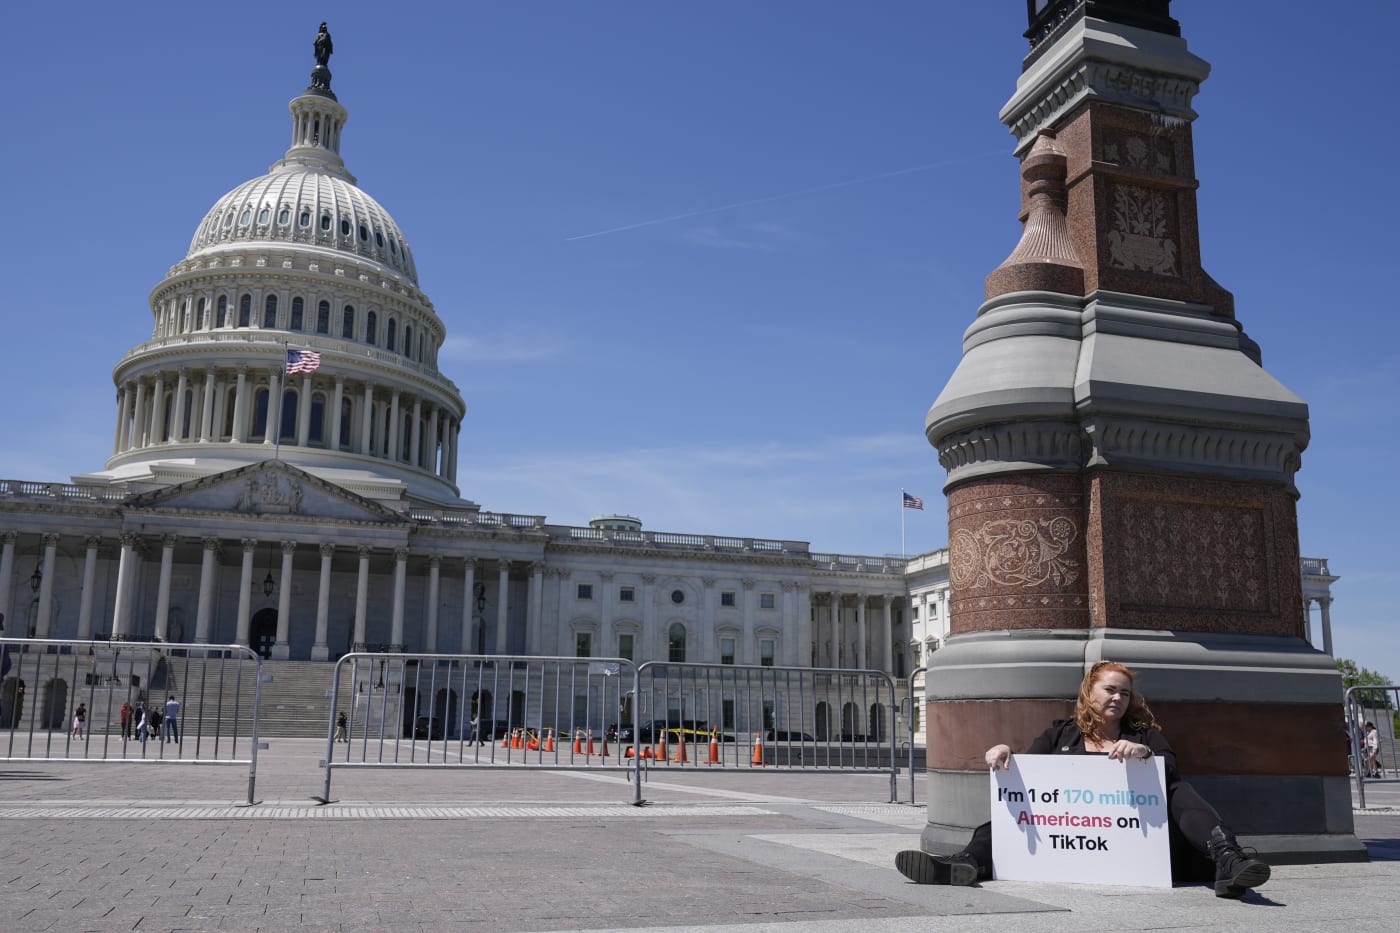 Senate passes bill that could ban TikTok